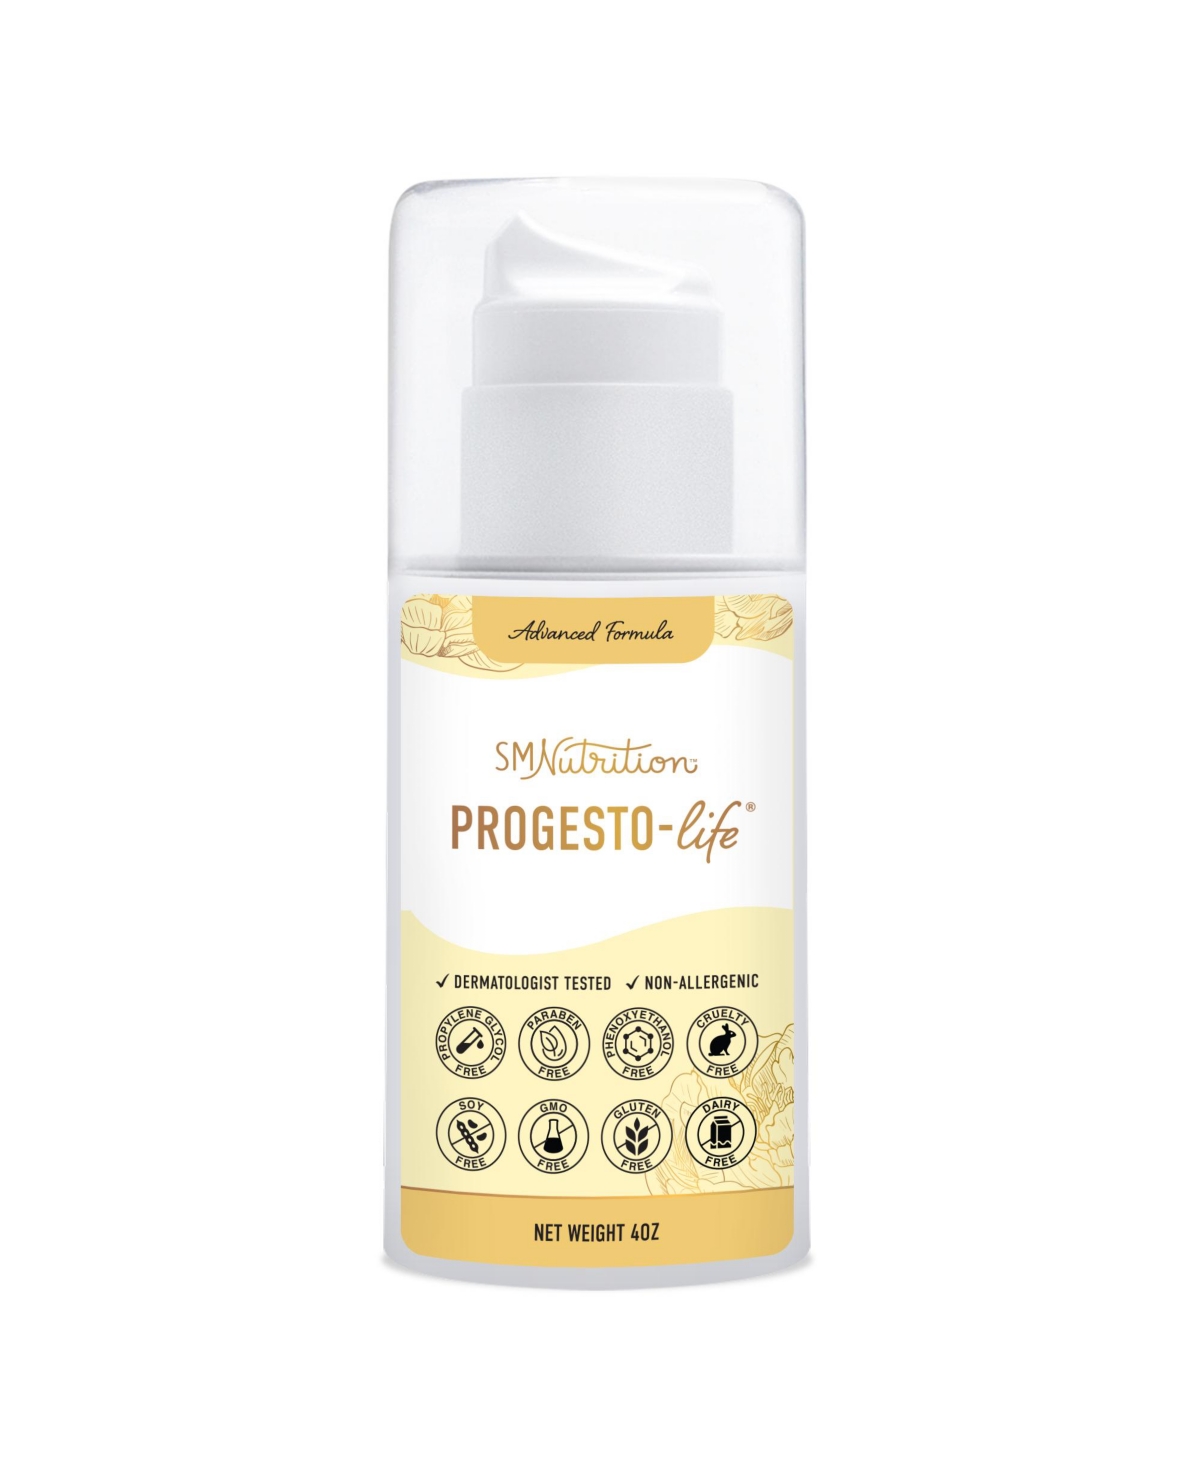 SMNutrition Advanced Formula Progesto-Life Cream 4oz Pump